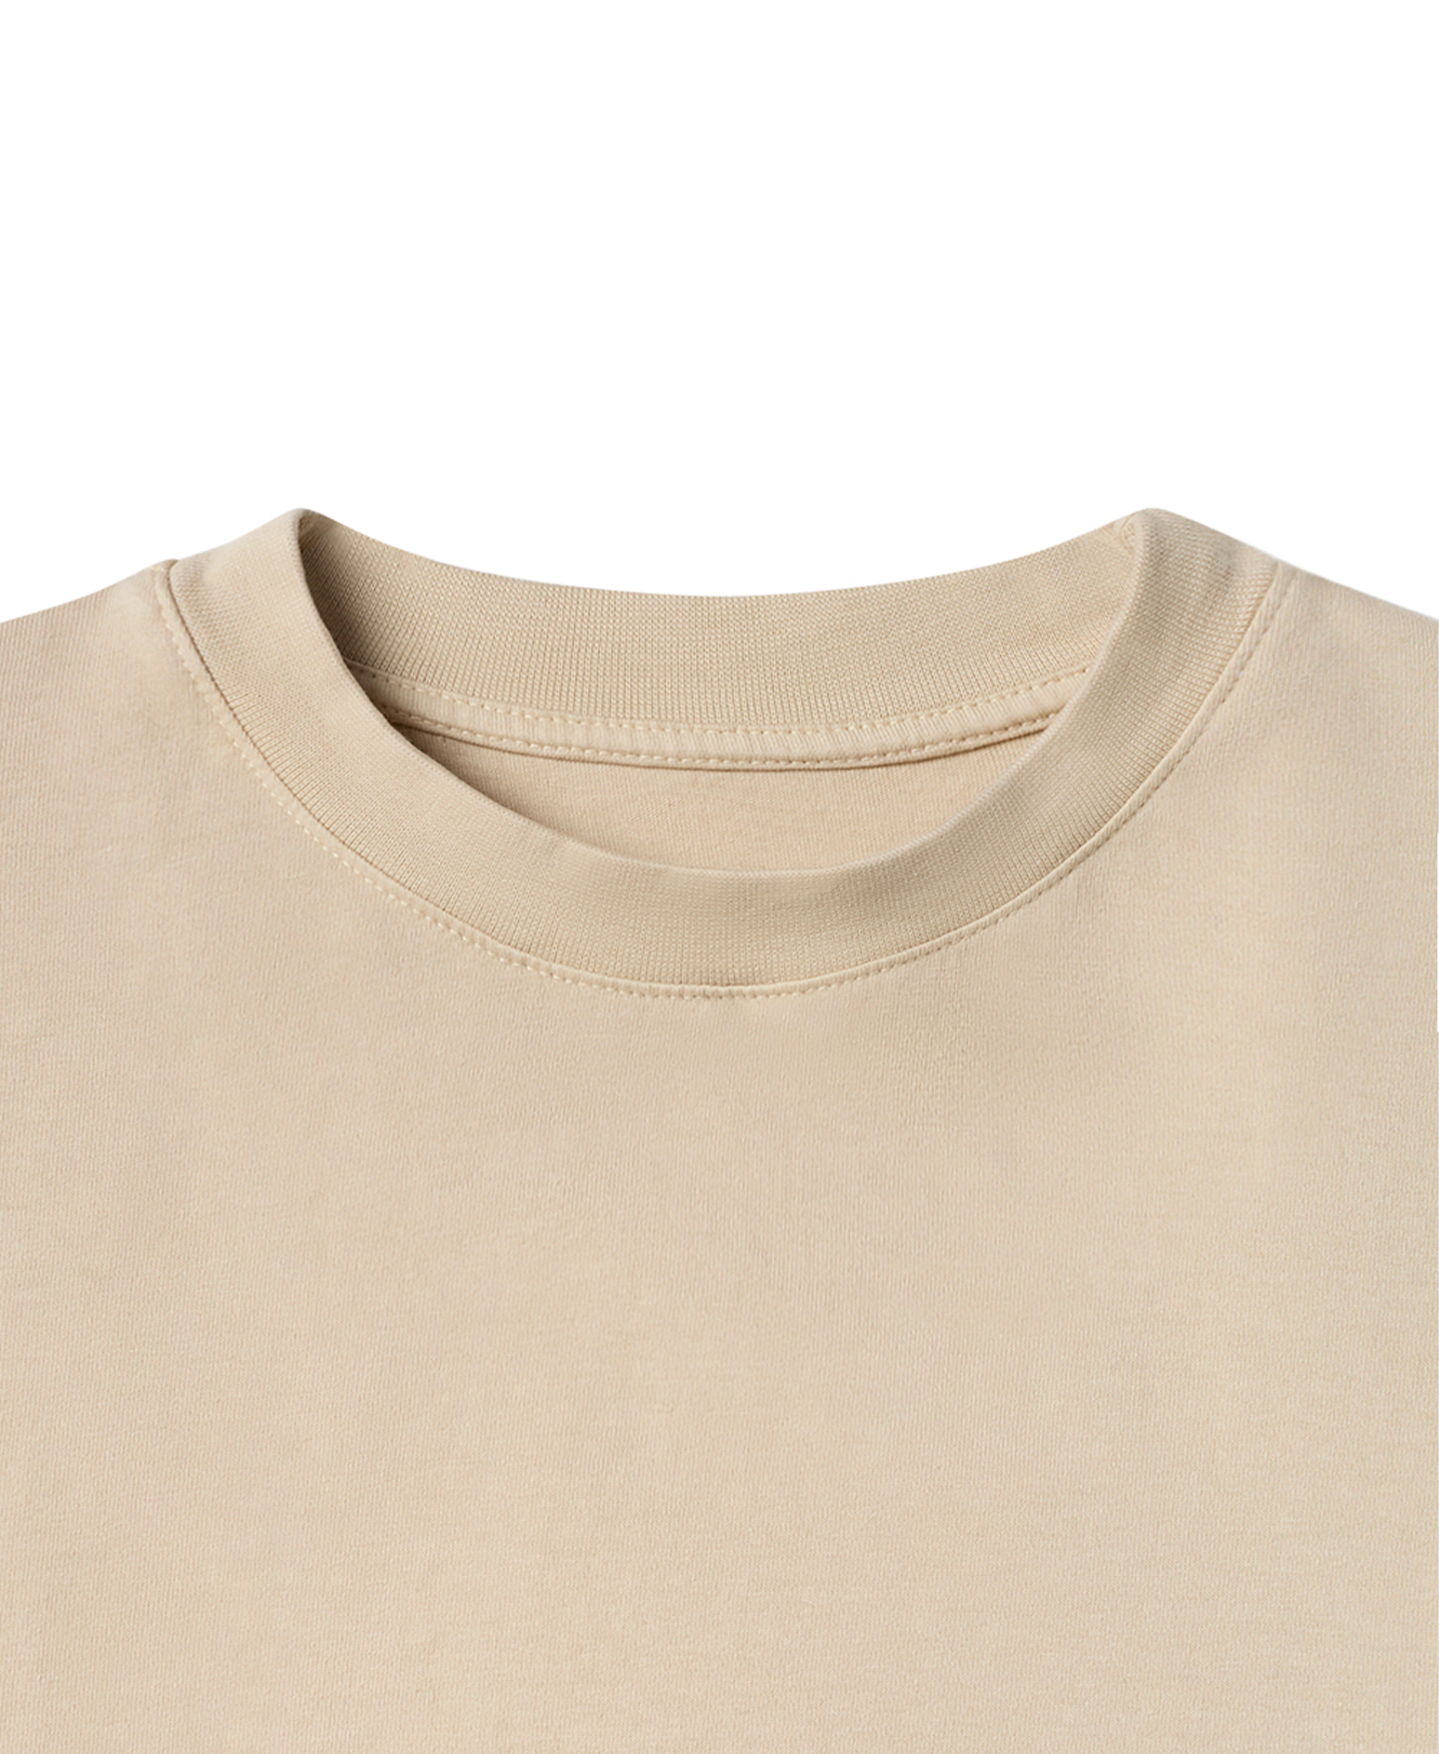 180 GSM 'Sand' T-Shirt – Velour Garments Bulk